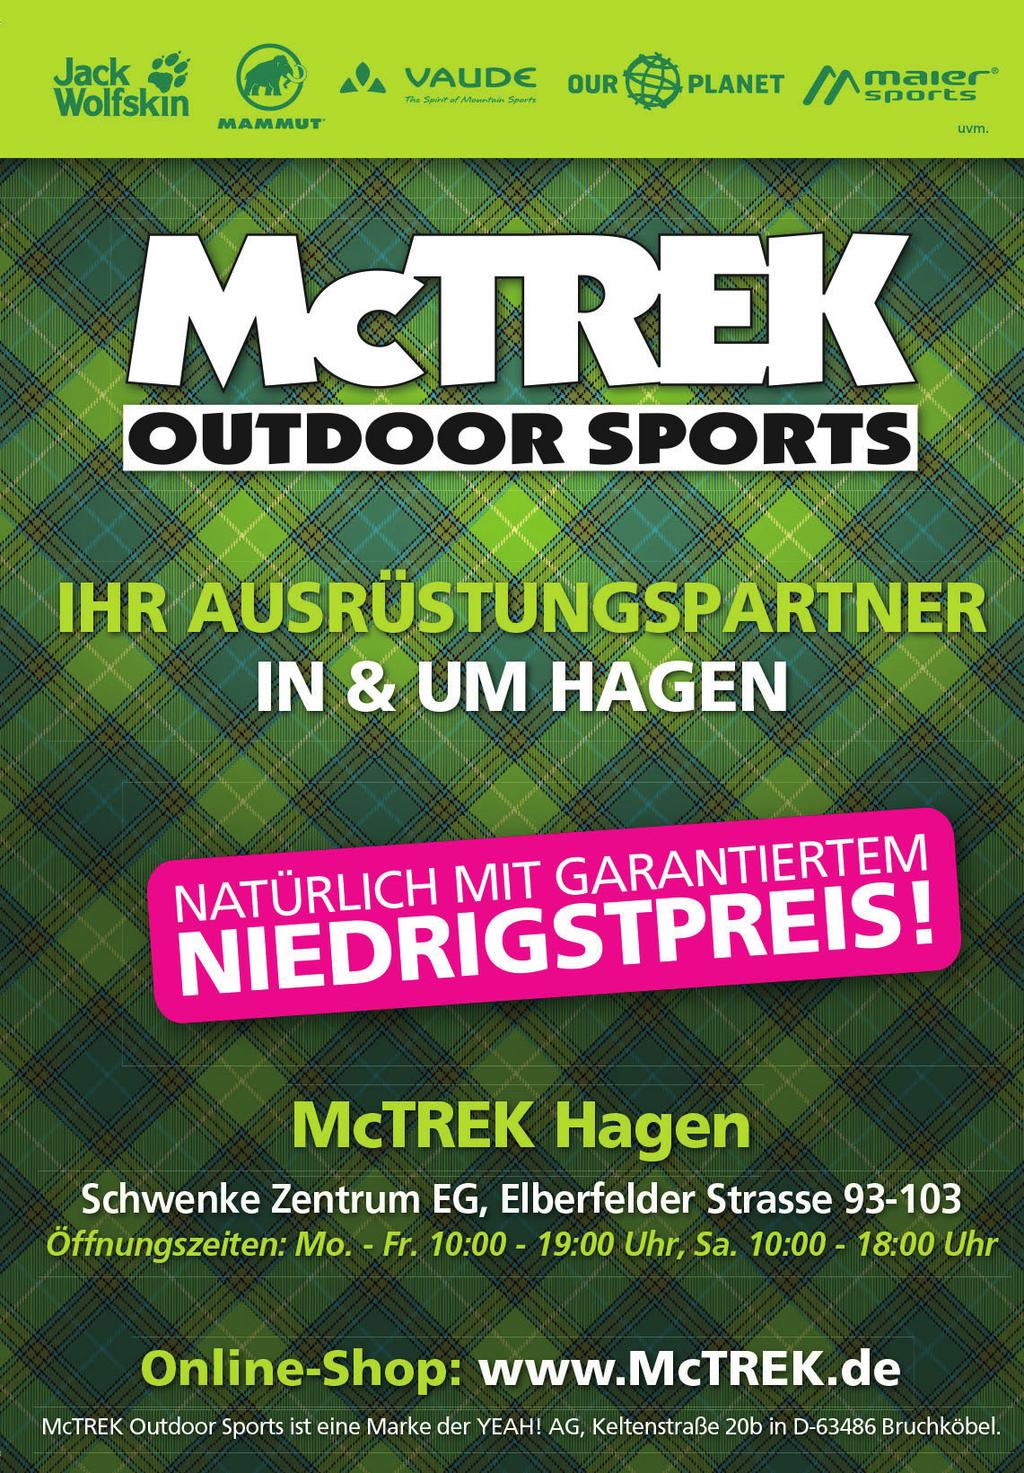 McTrek HAGENagentur GmbH HAGENinfo Körnerstraße 25, 58095 Hagen Telefon: 02331 80999-80, Fax: 02331 80999-88 E-Mail: